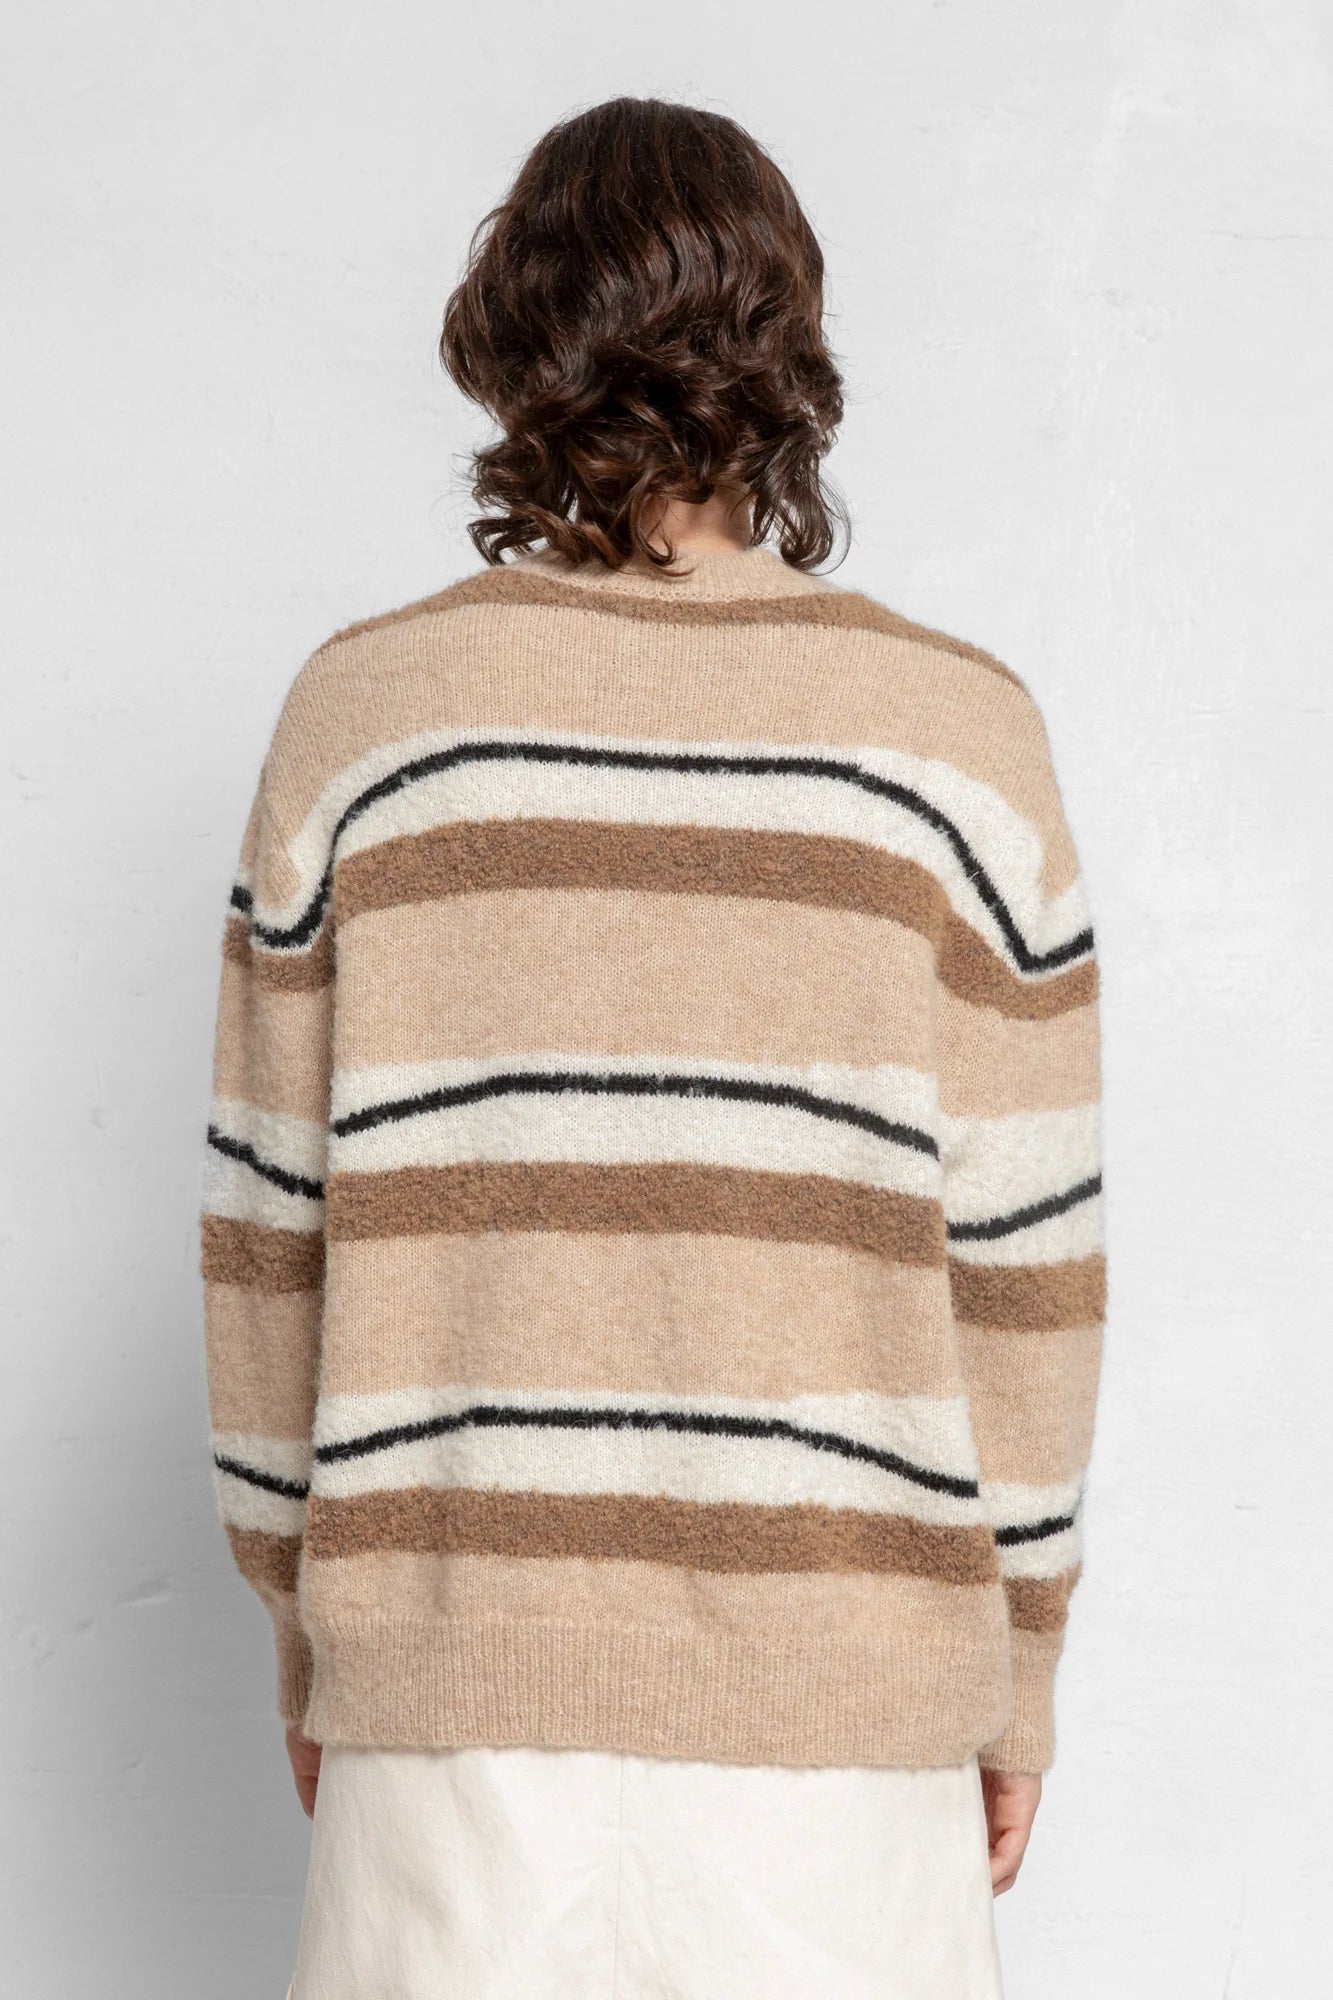 Alan alpaca sweater in light striped